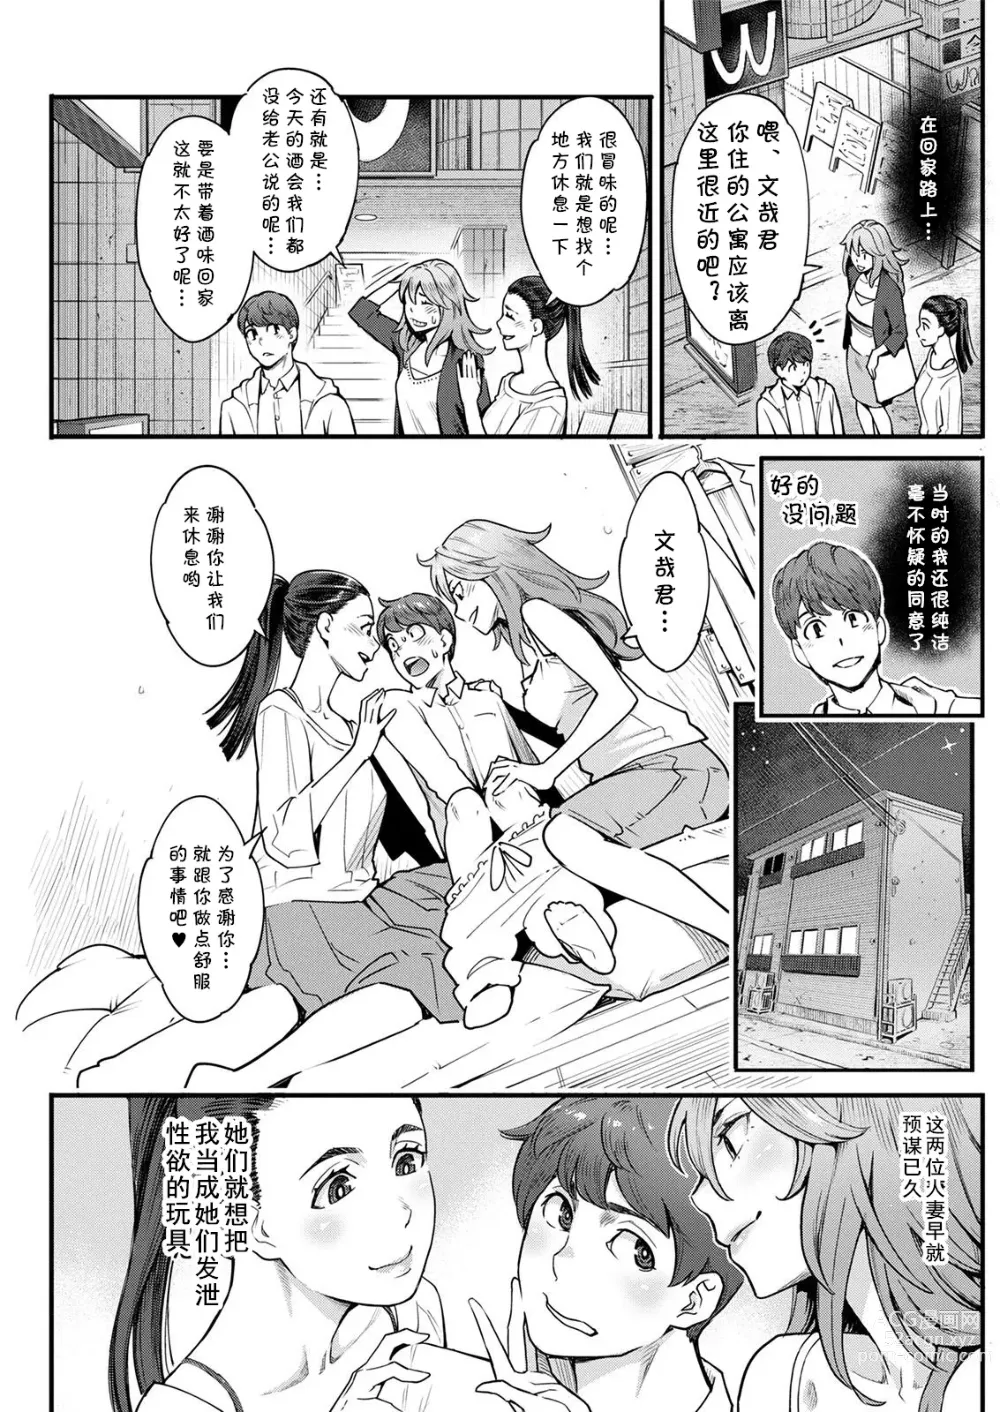 Page 9 of manga Otona no Omocha